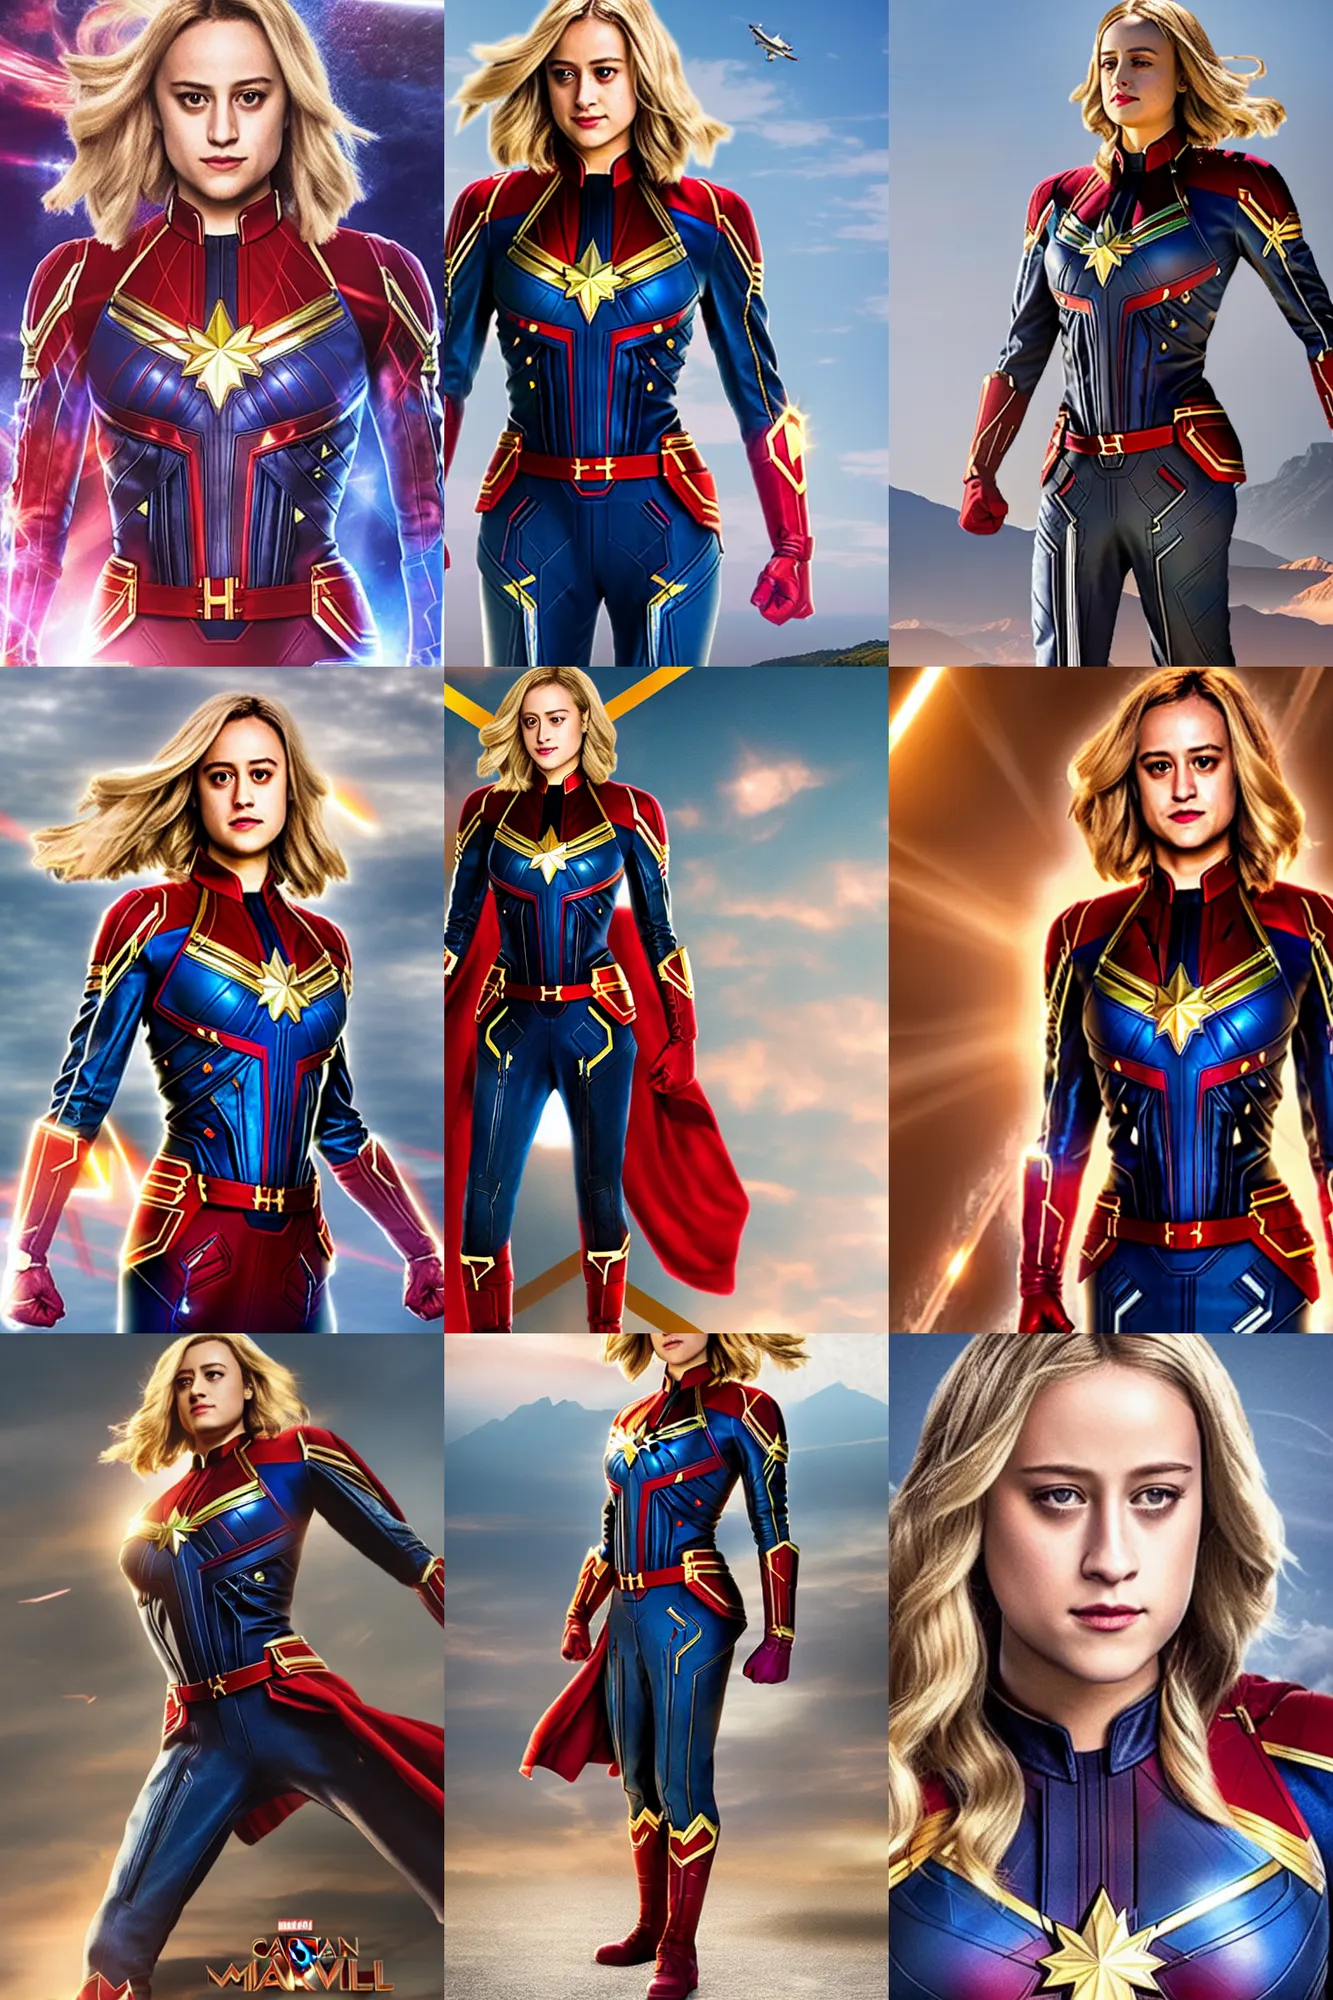 Prompt: Lili Reinhart as Captain Marvel, MCU